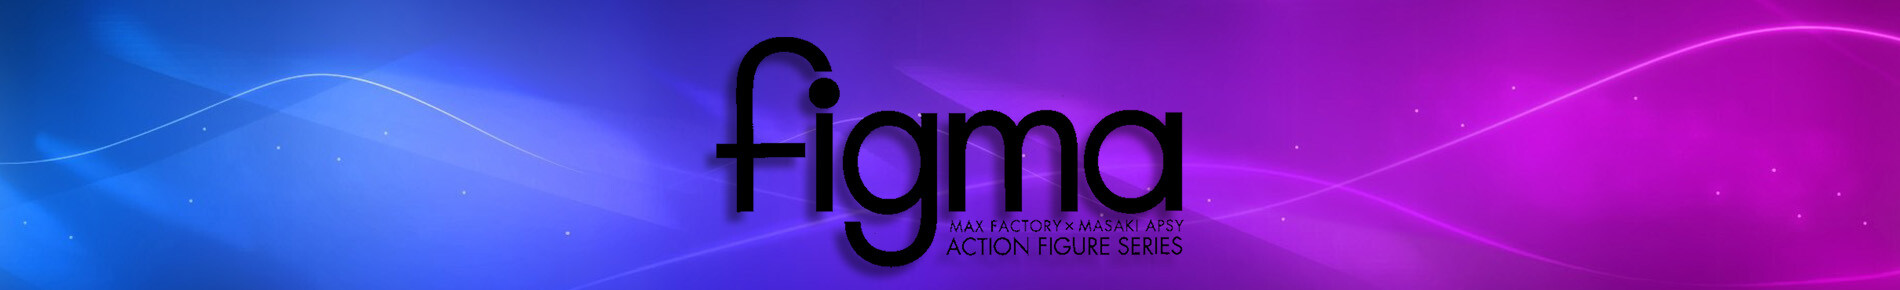 Figma Action Figurine